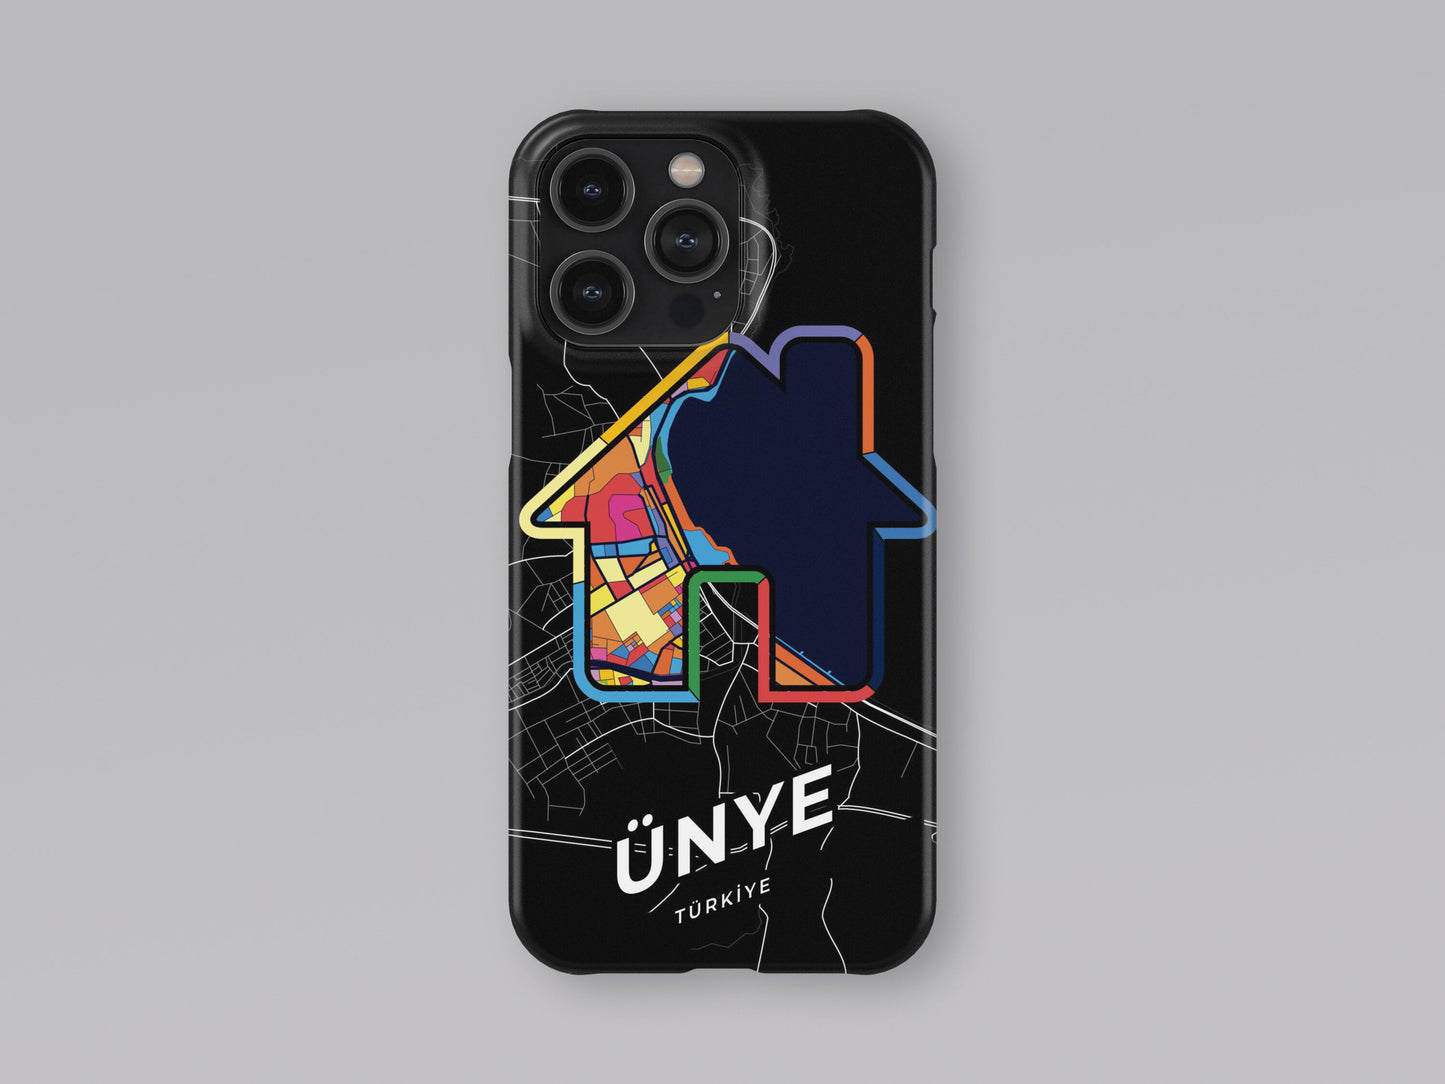 Ünye Turkey slim phone case with colorful icon 3